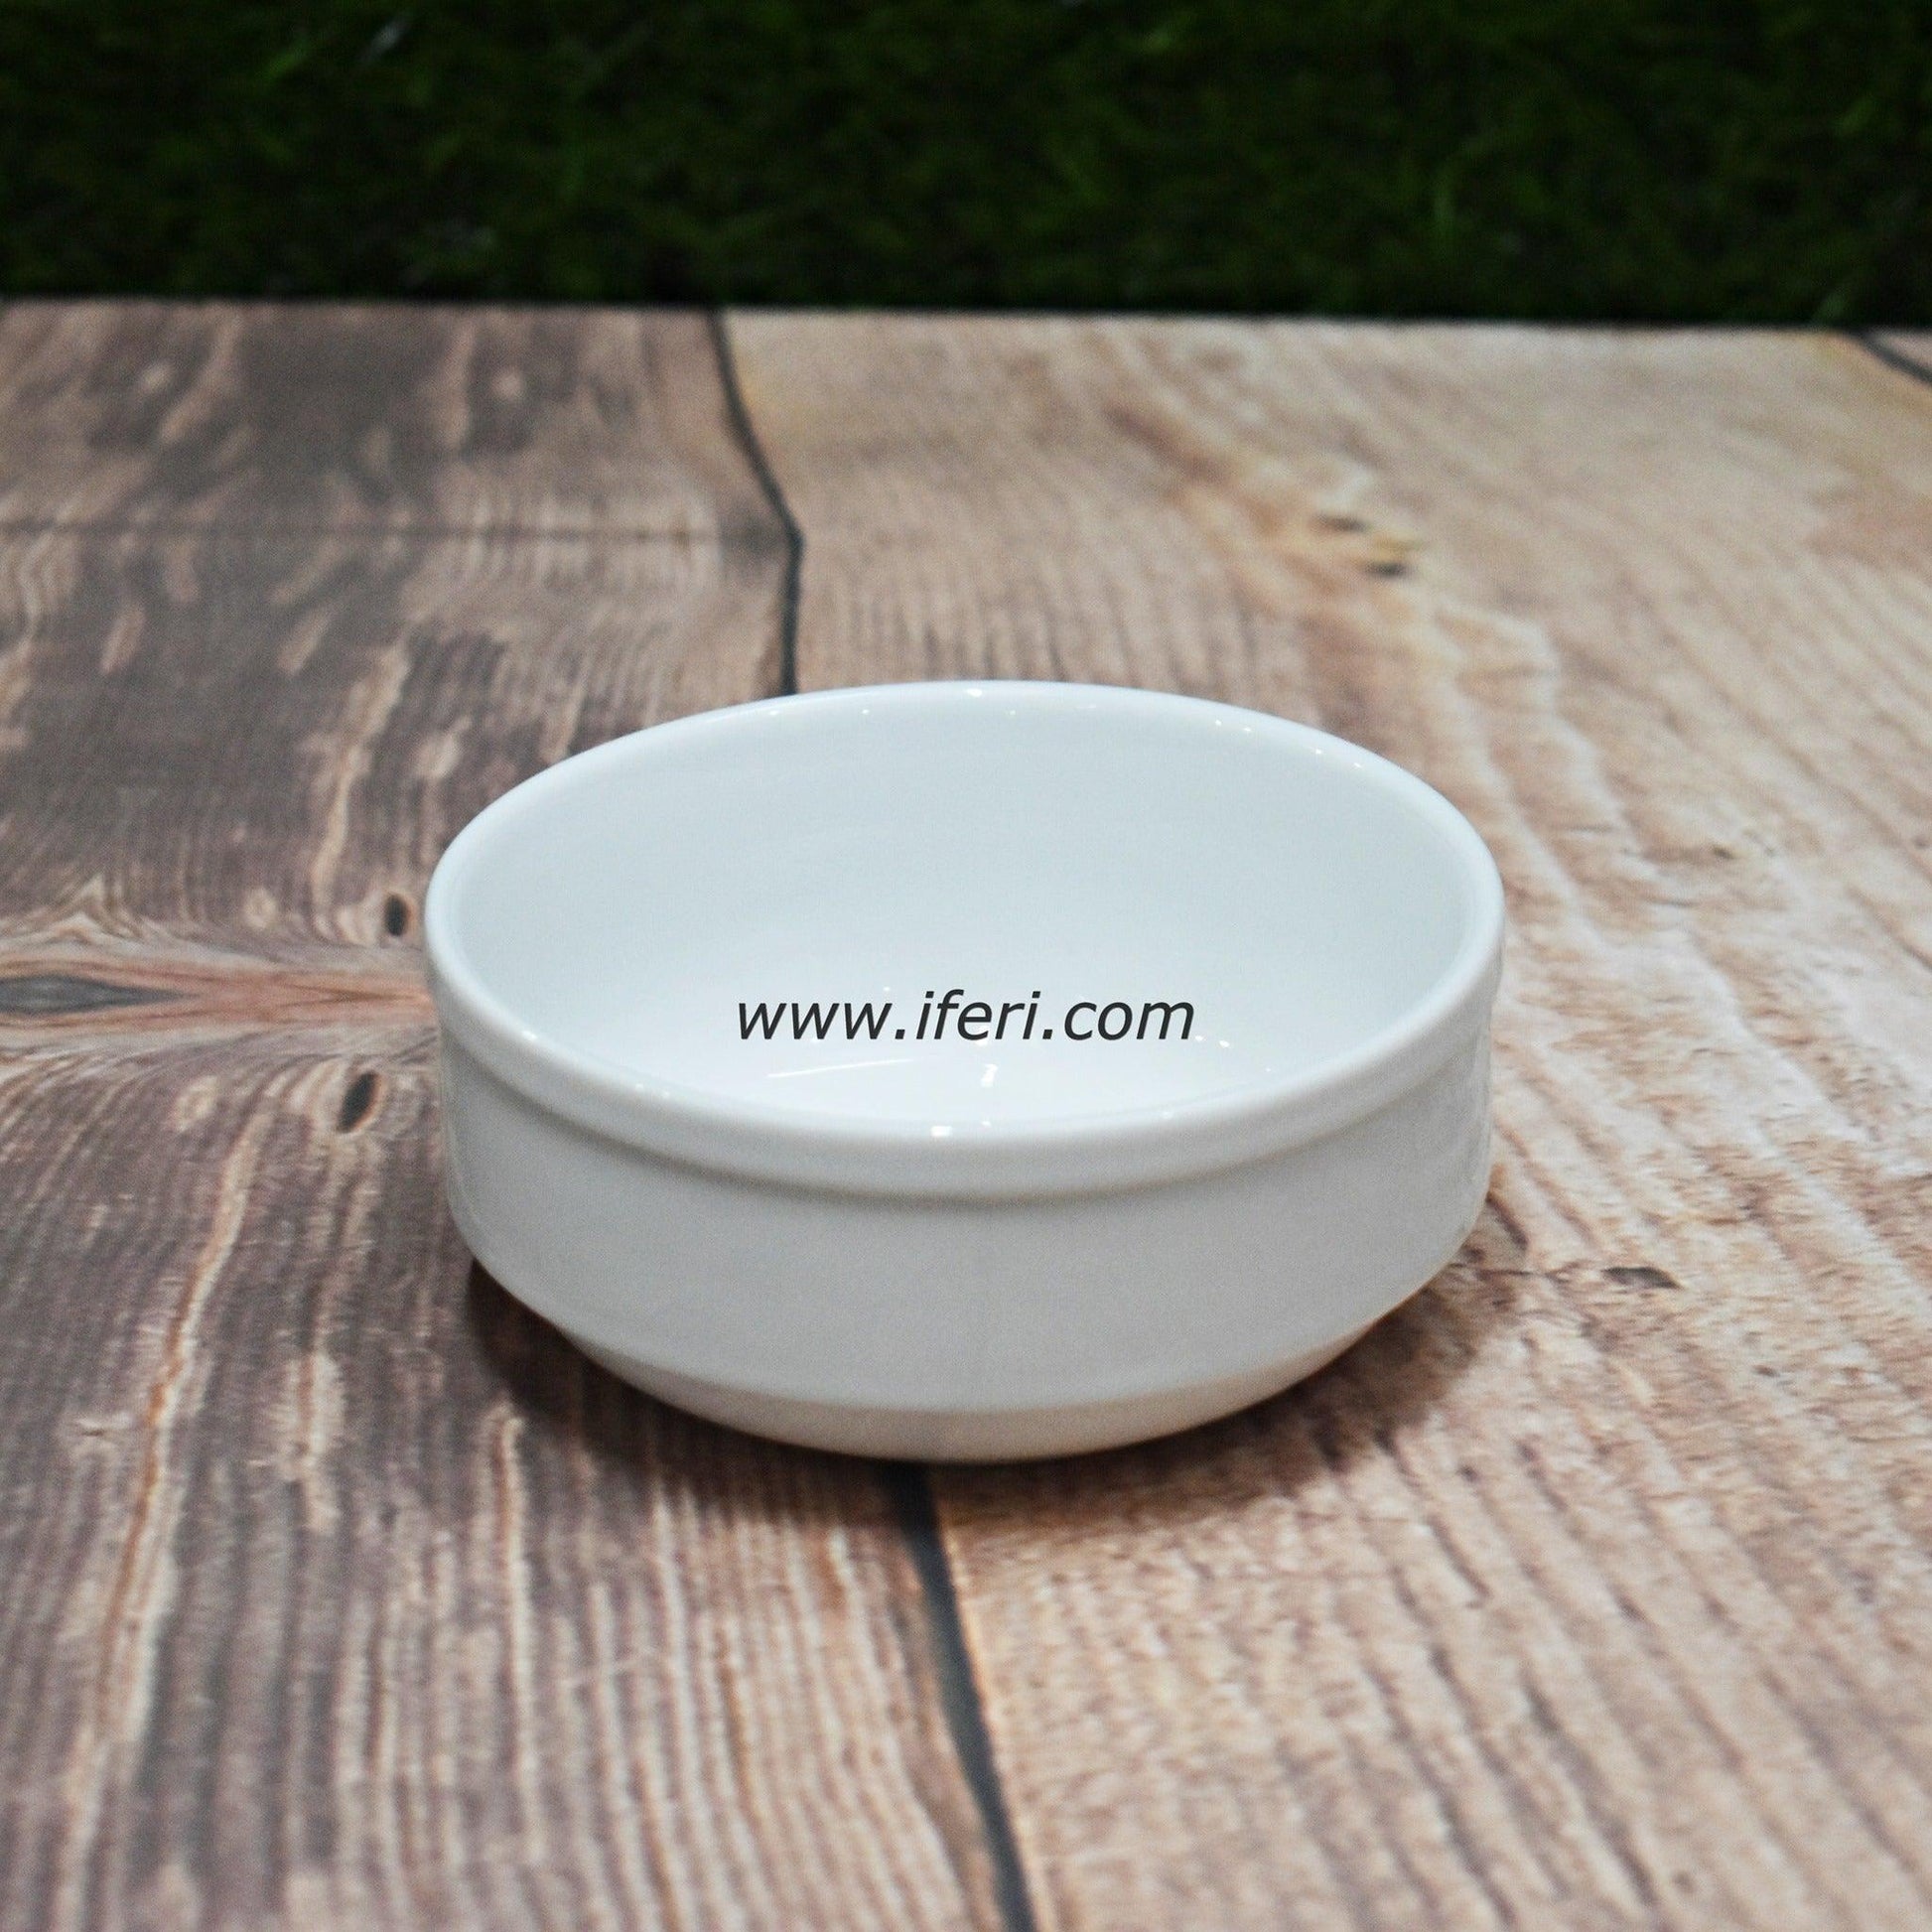 4 inch White Ceramic Soup Bowl SN4866 Price in Bangladesh - iferi.com